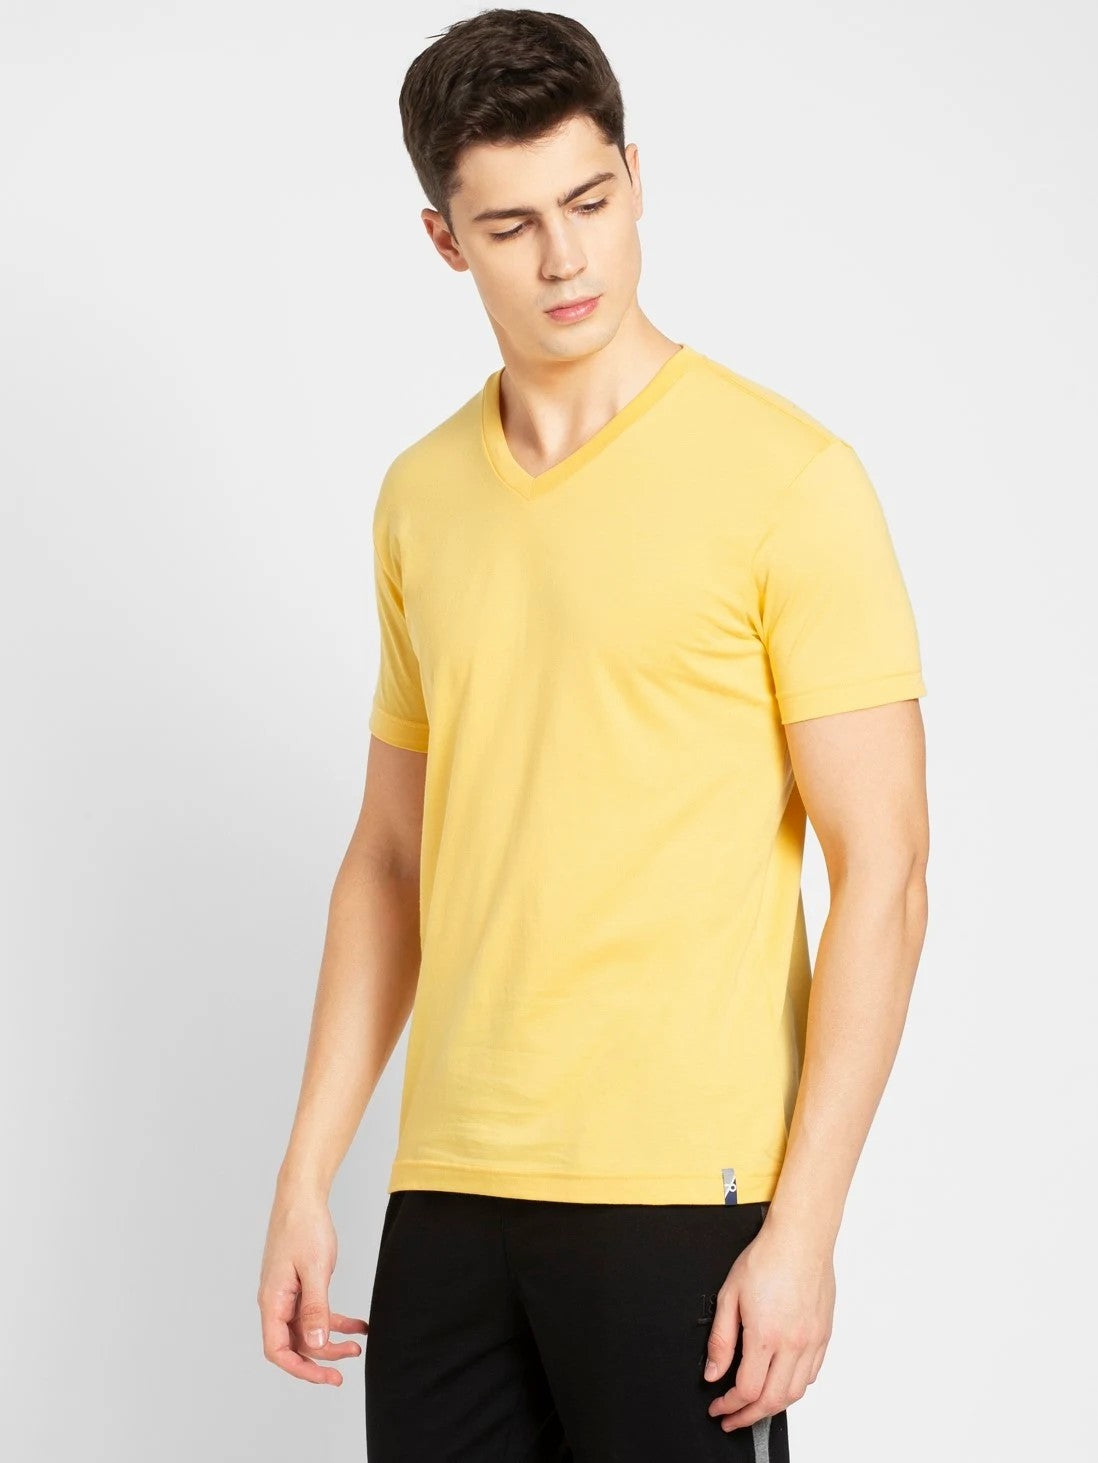 Men's Corn Silk V-Neck T-shirt